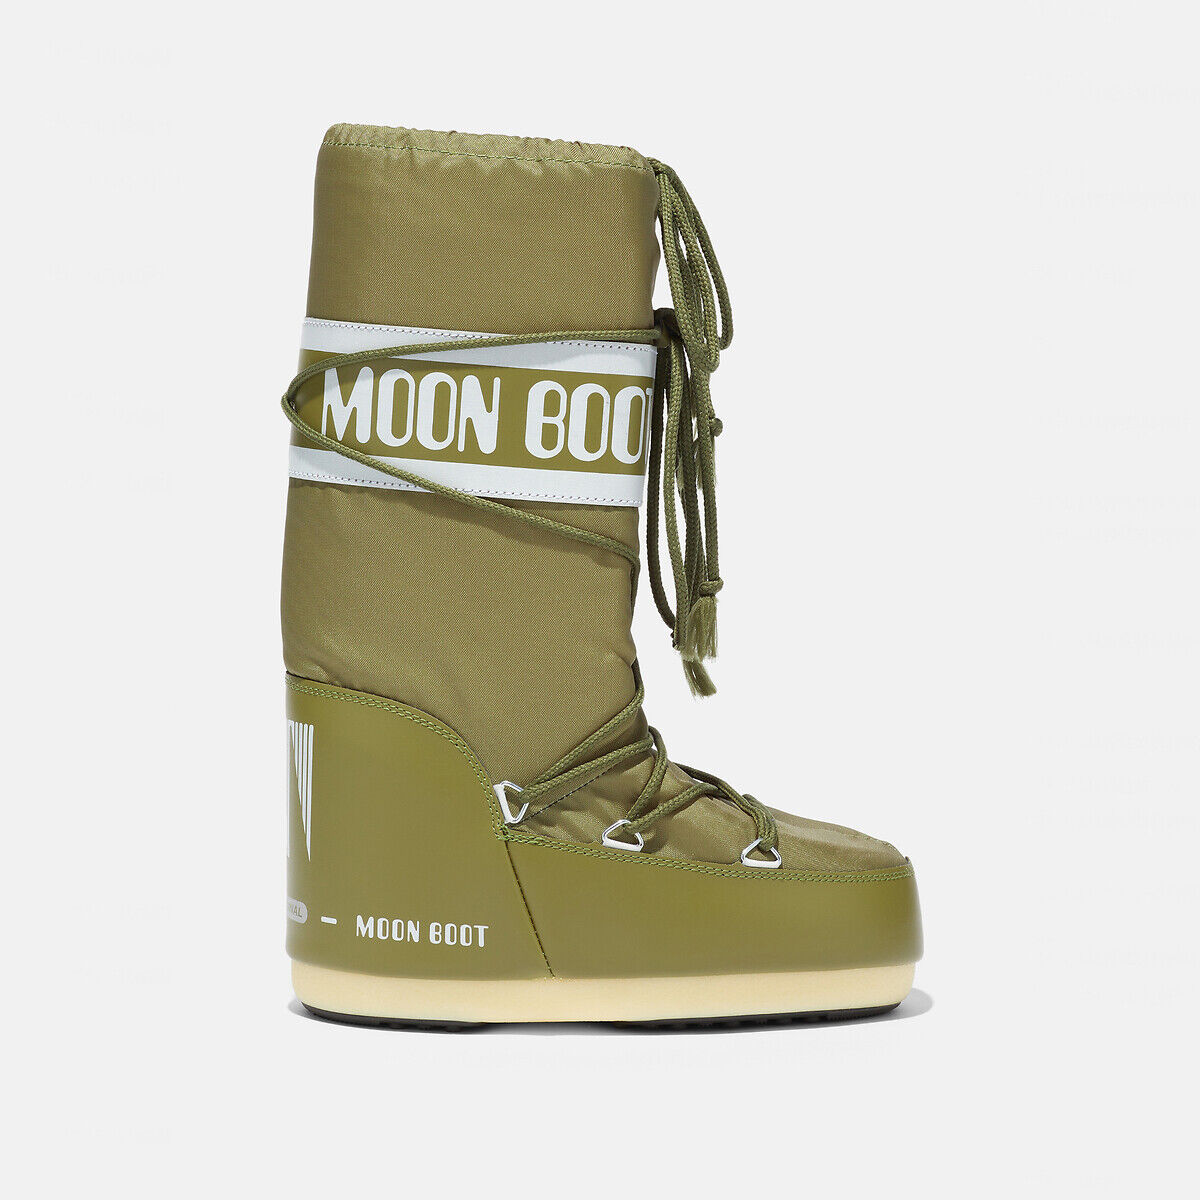 MOON BOOT Stiefel Moon Boot Nylon GELB;GRÜN